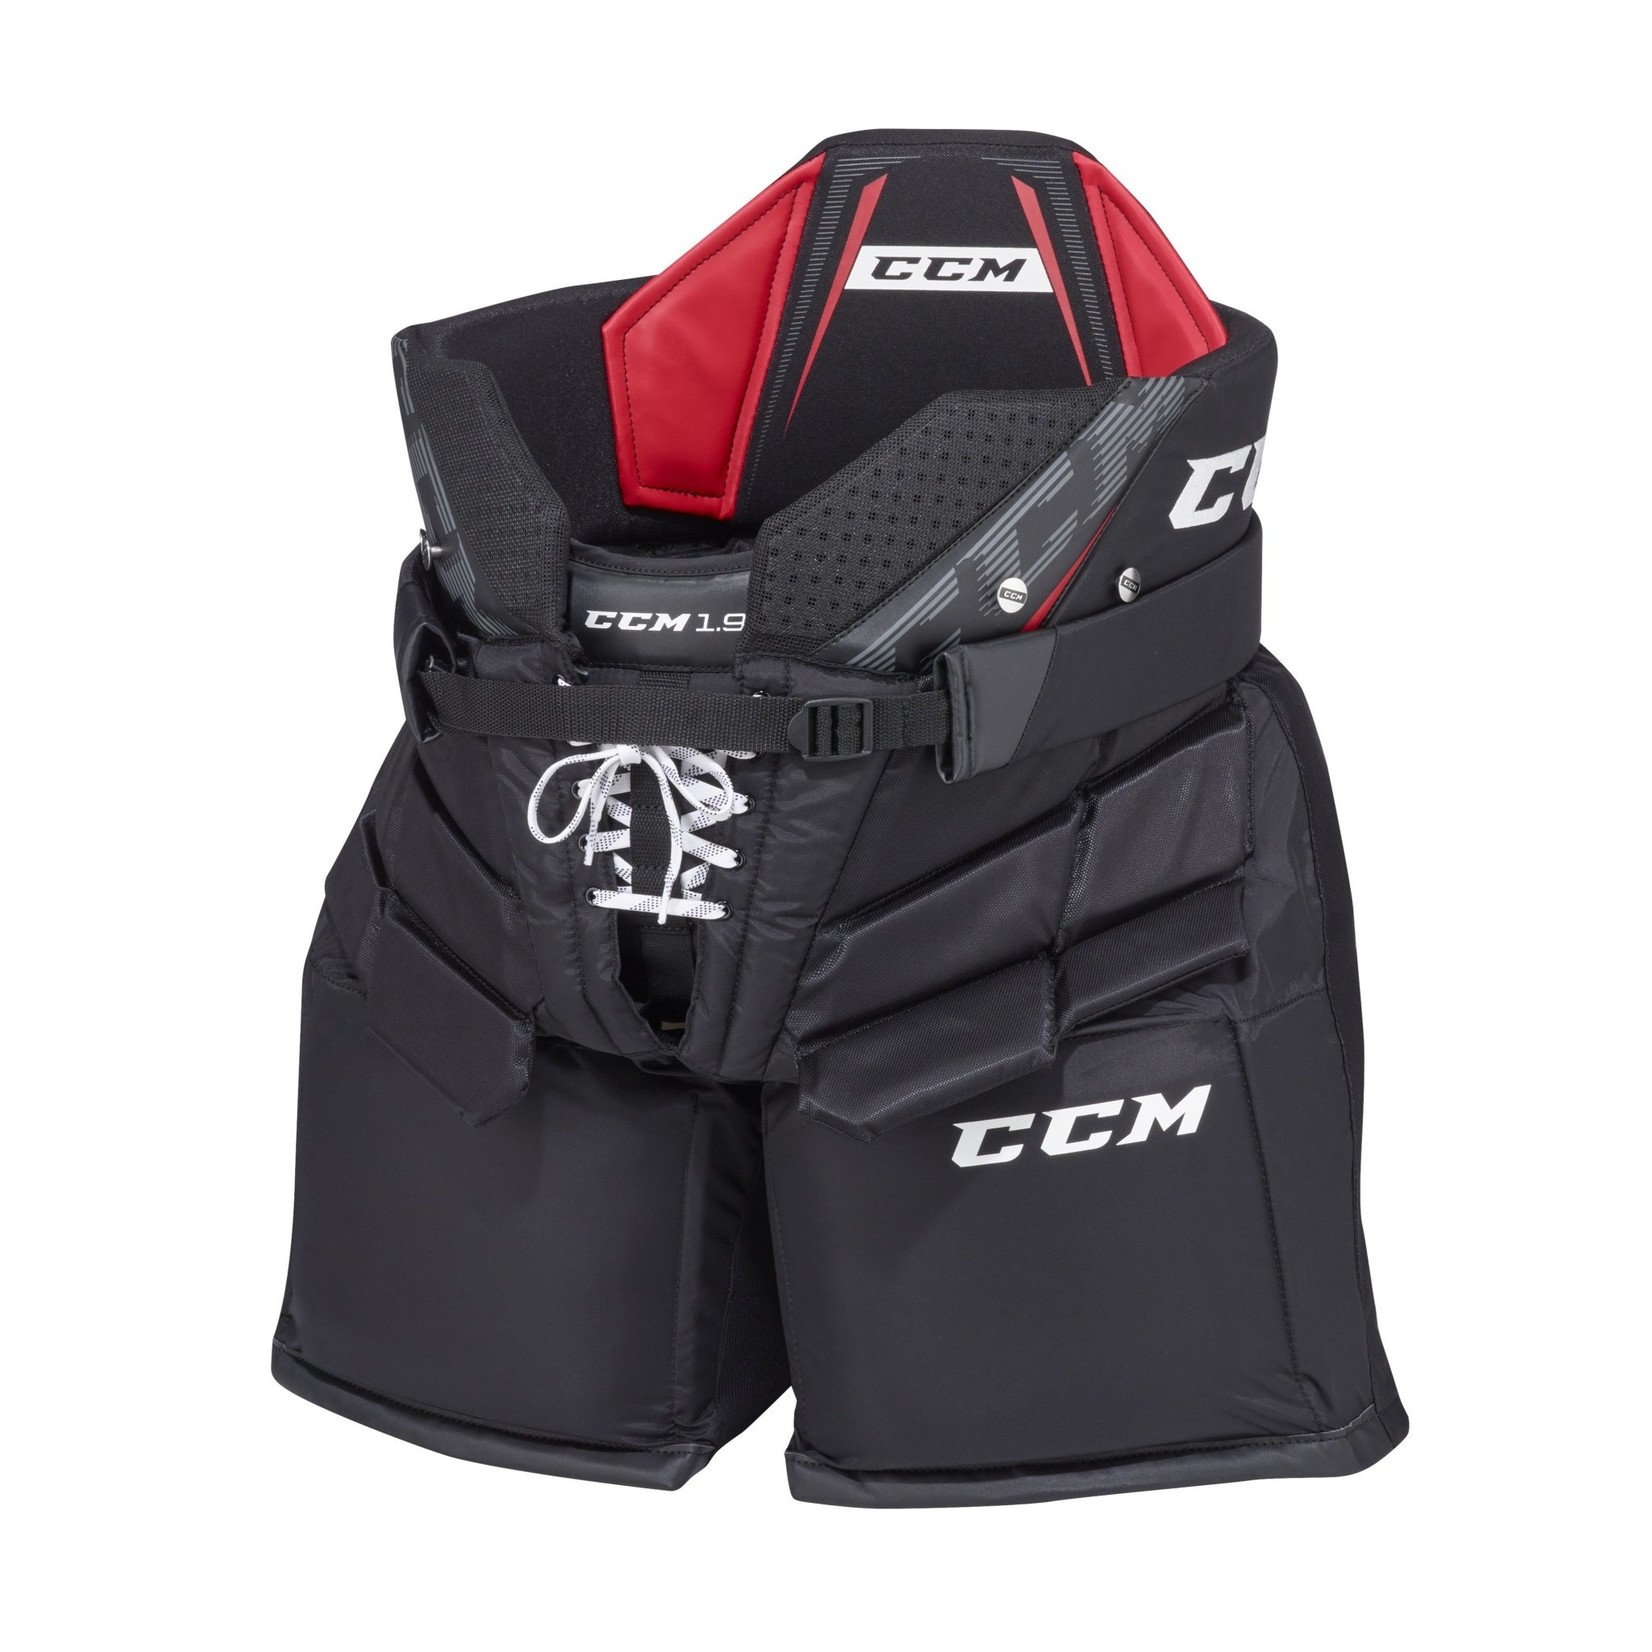 CCM CCM Hockey Goal Pants, CCM 1.9, Intermediate